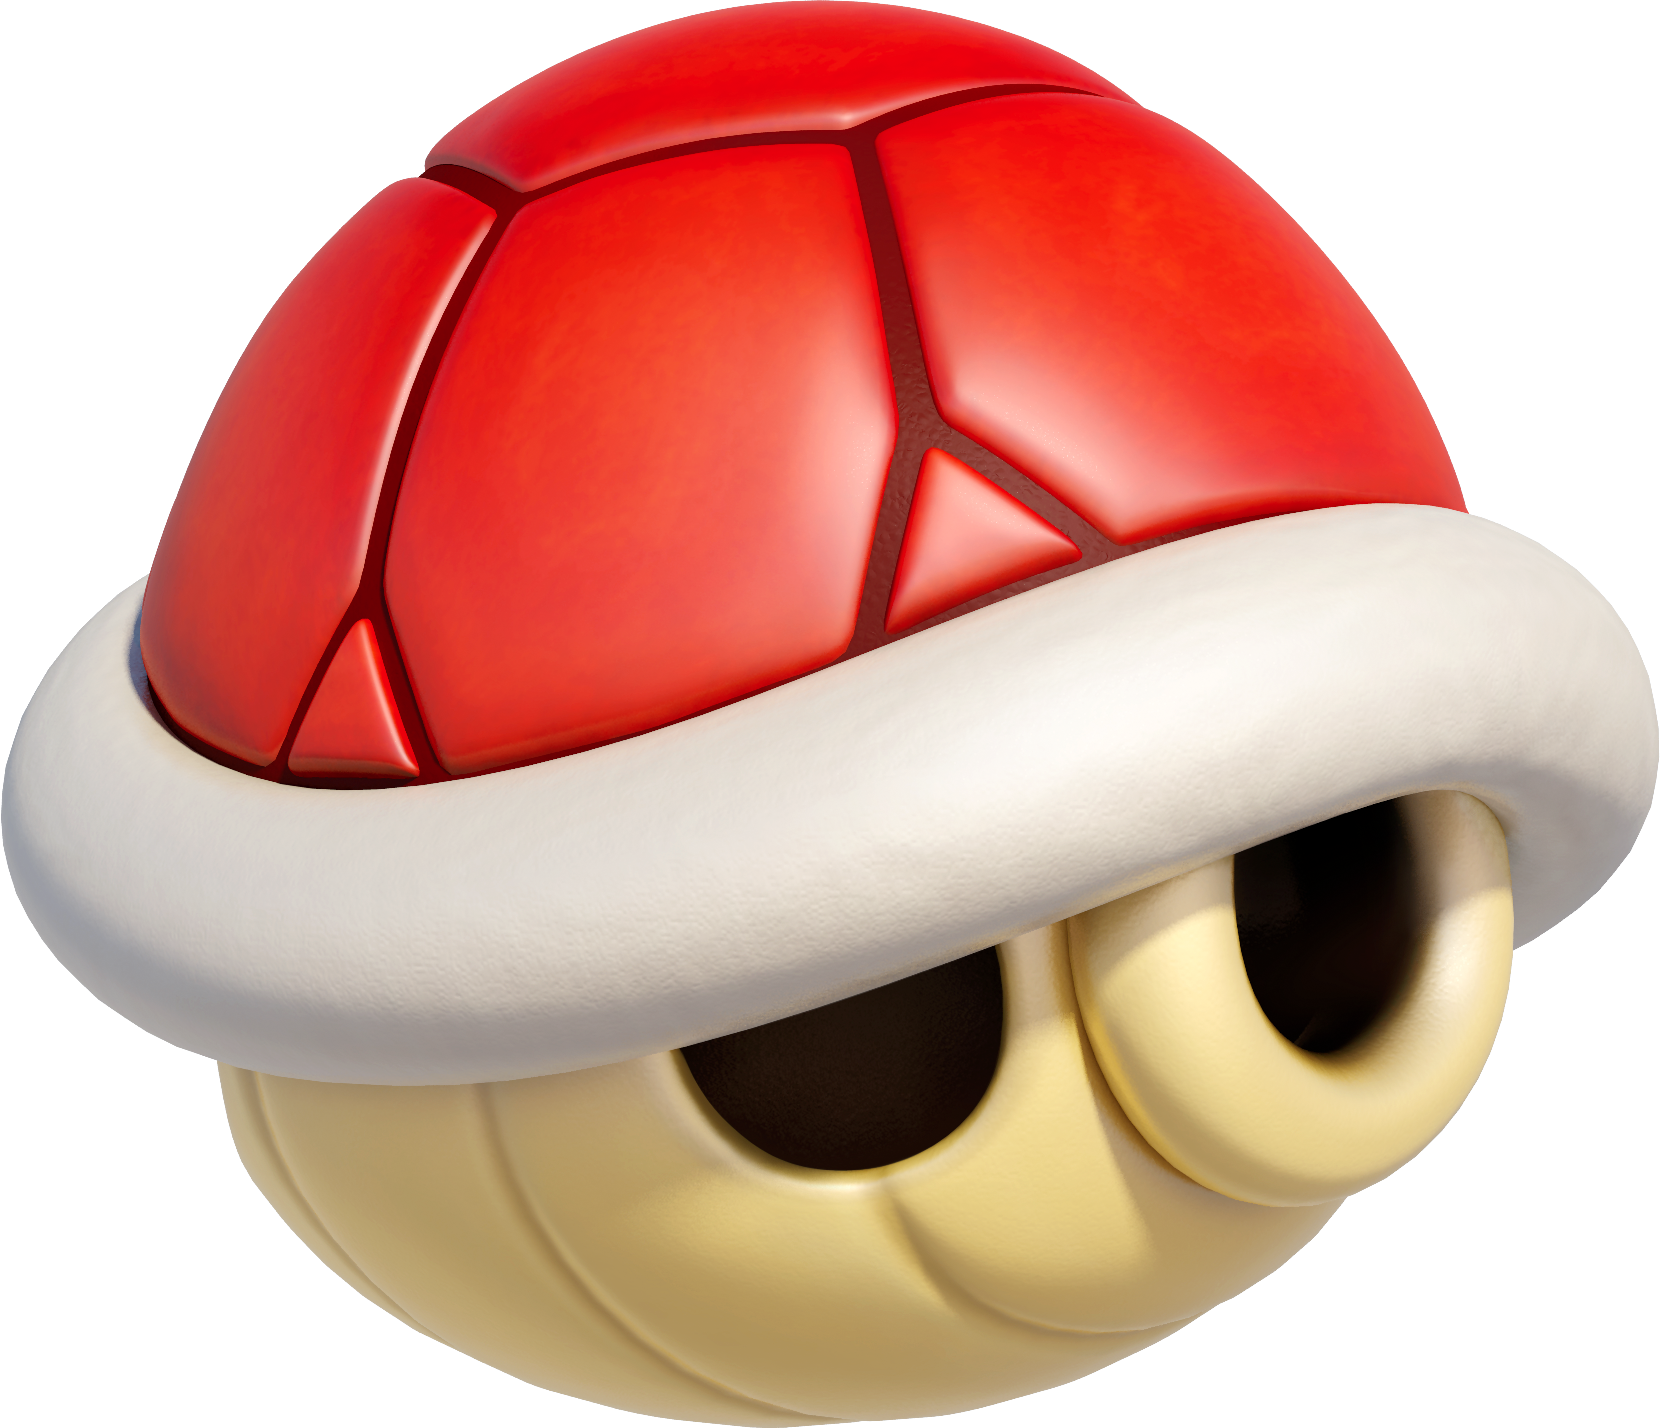 Super Mario Kart Red Shell